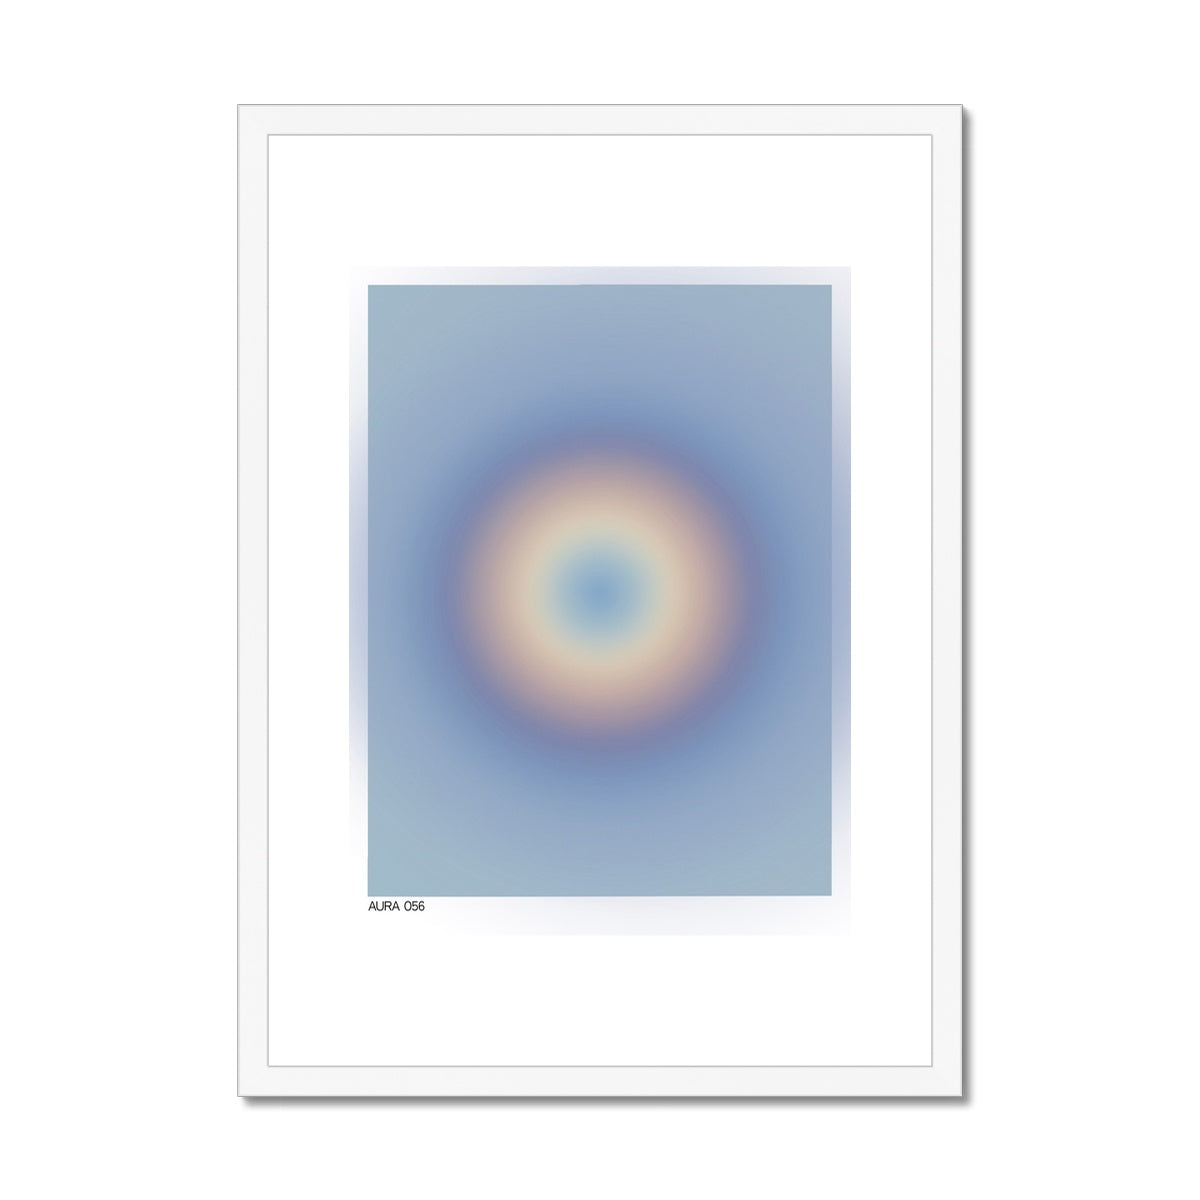 aura 056 Framed & Mounted Print